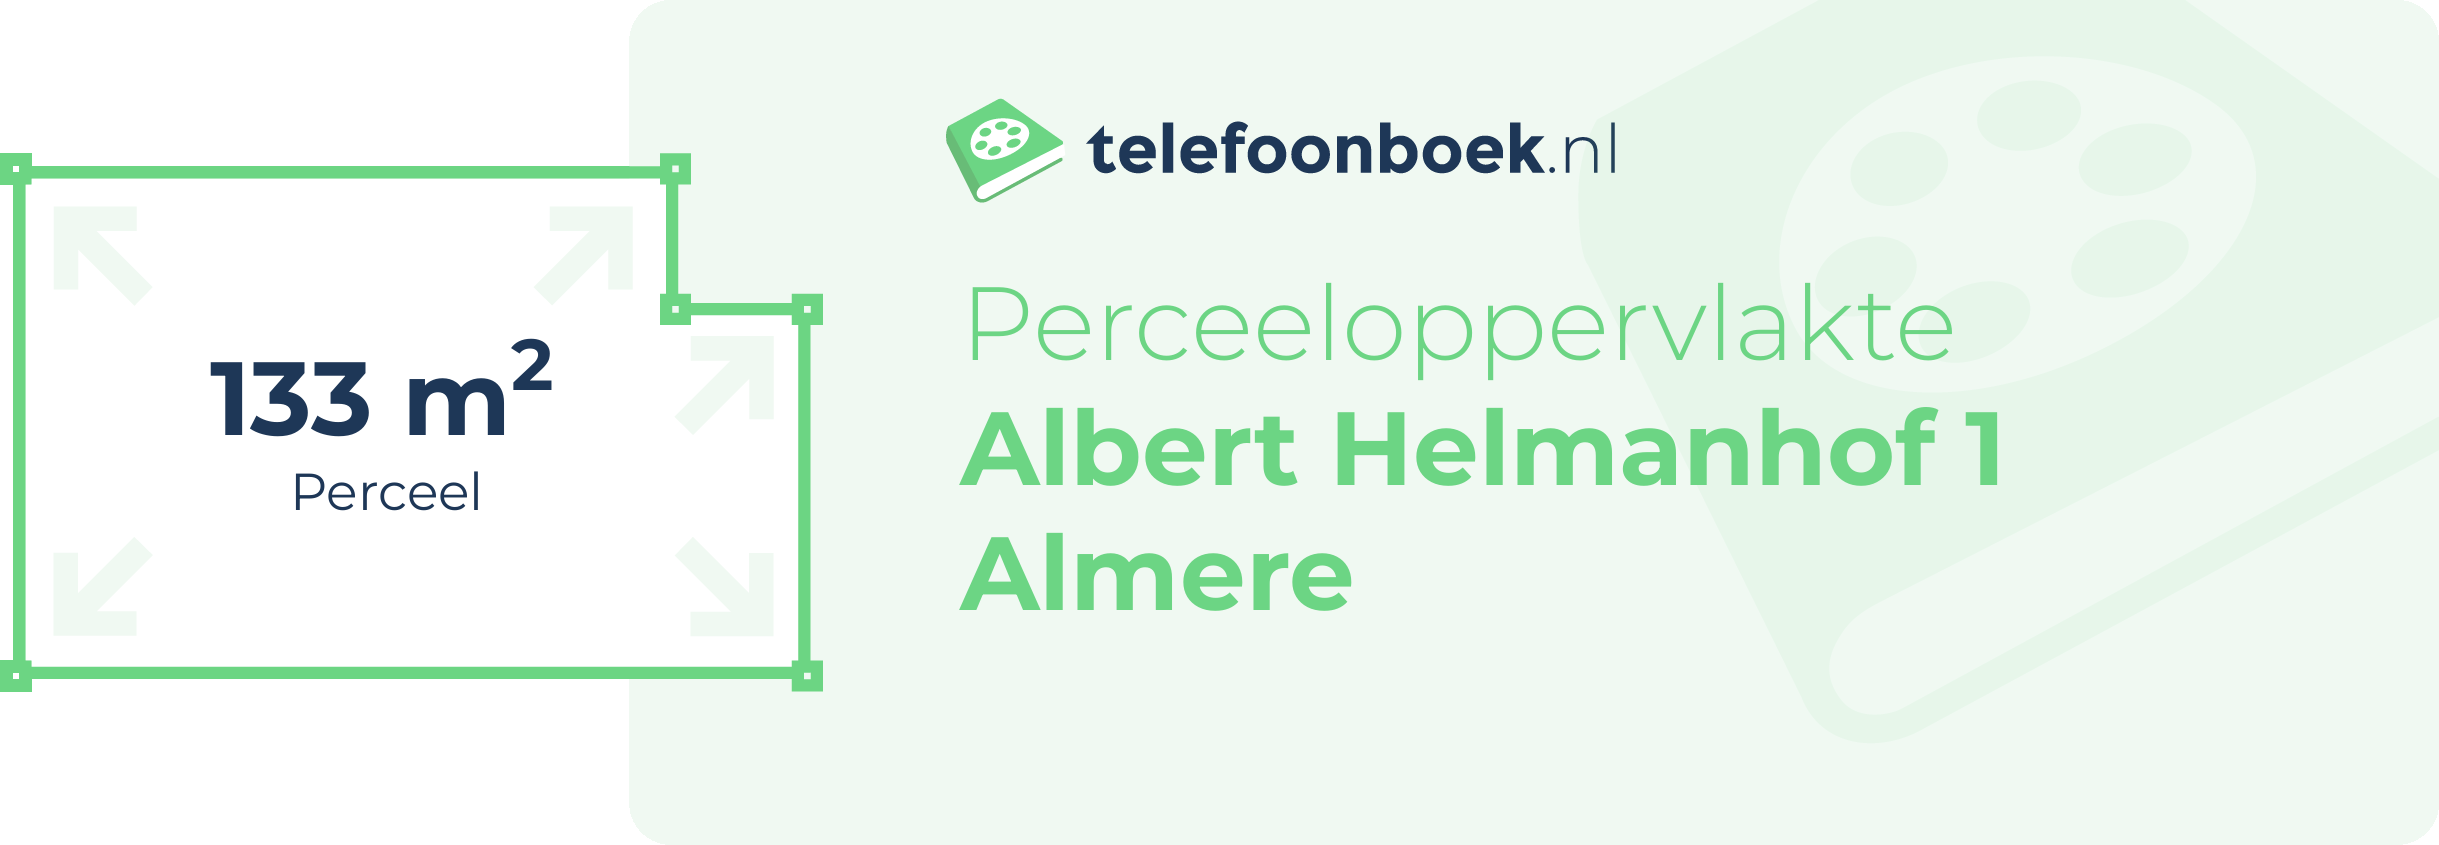 Perceeloppervlakte Albert Helmanhof 1 Almere